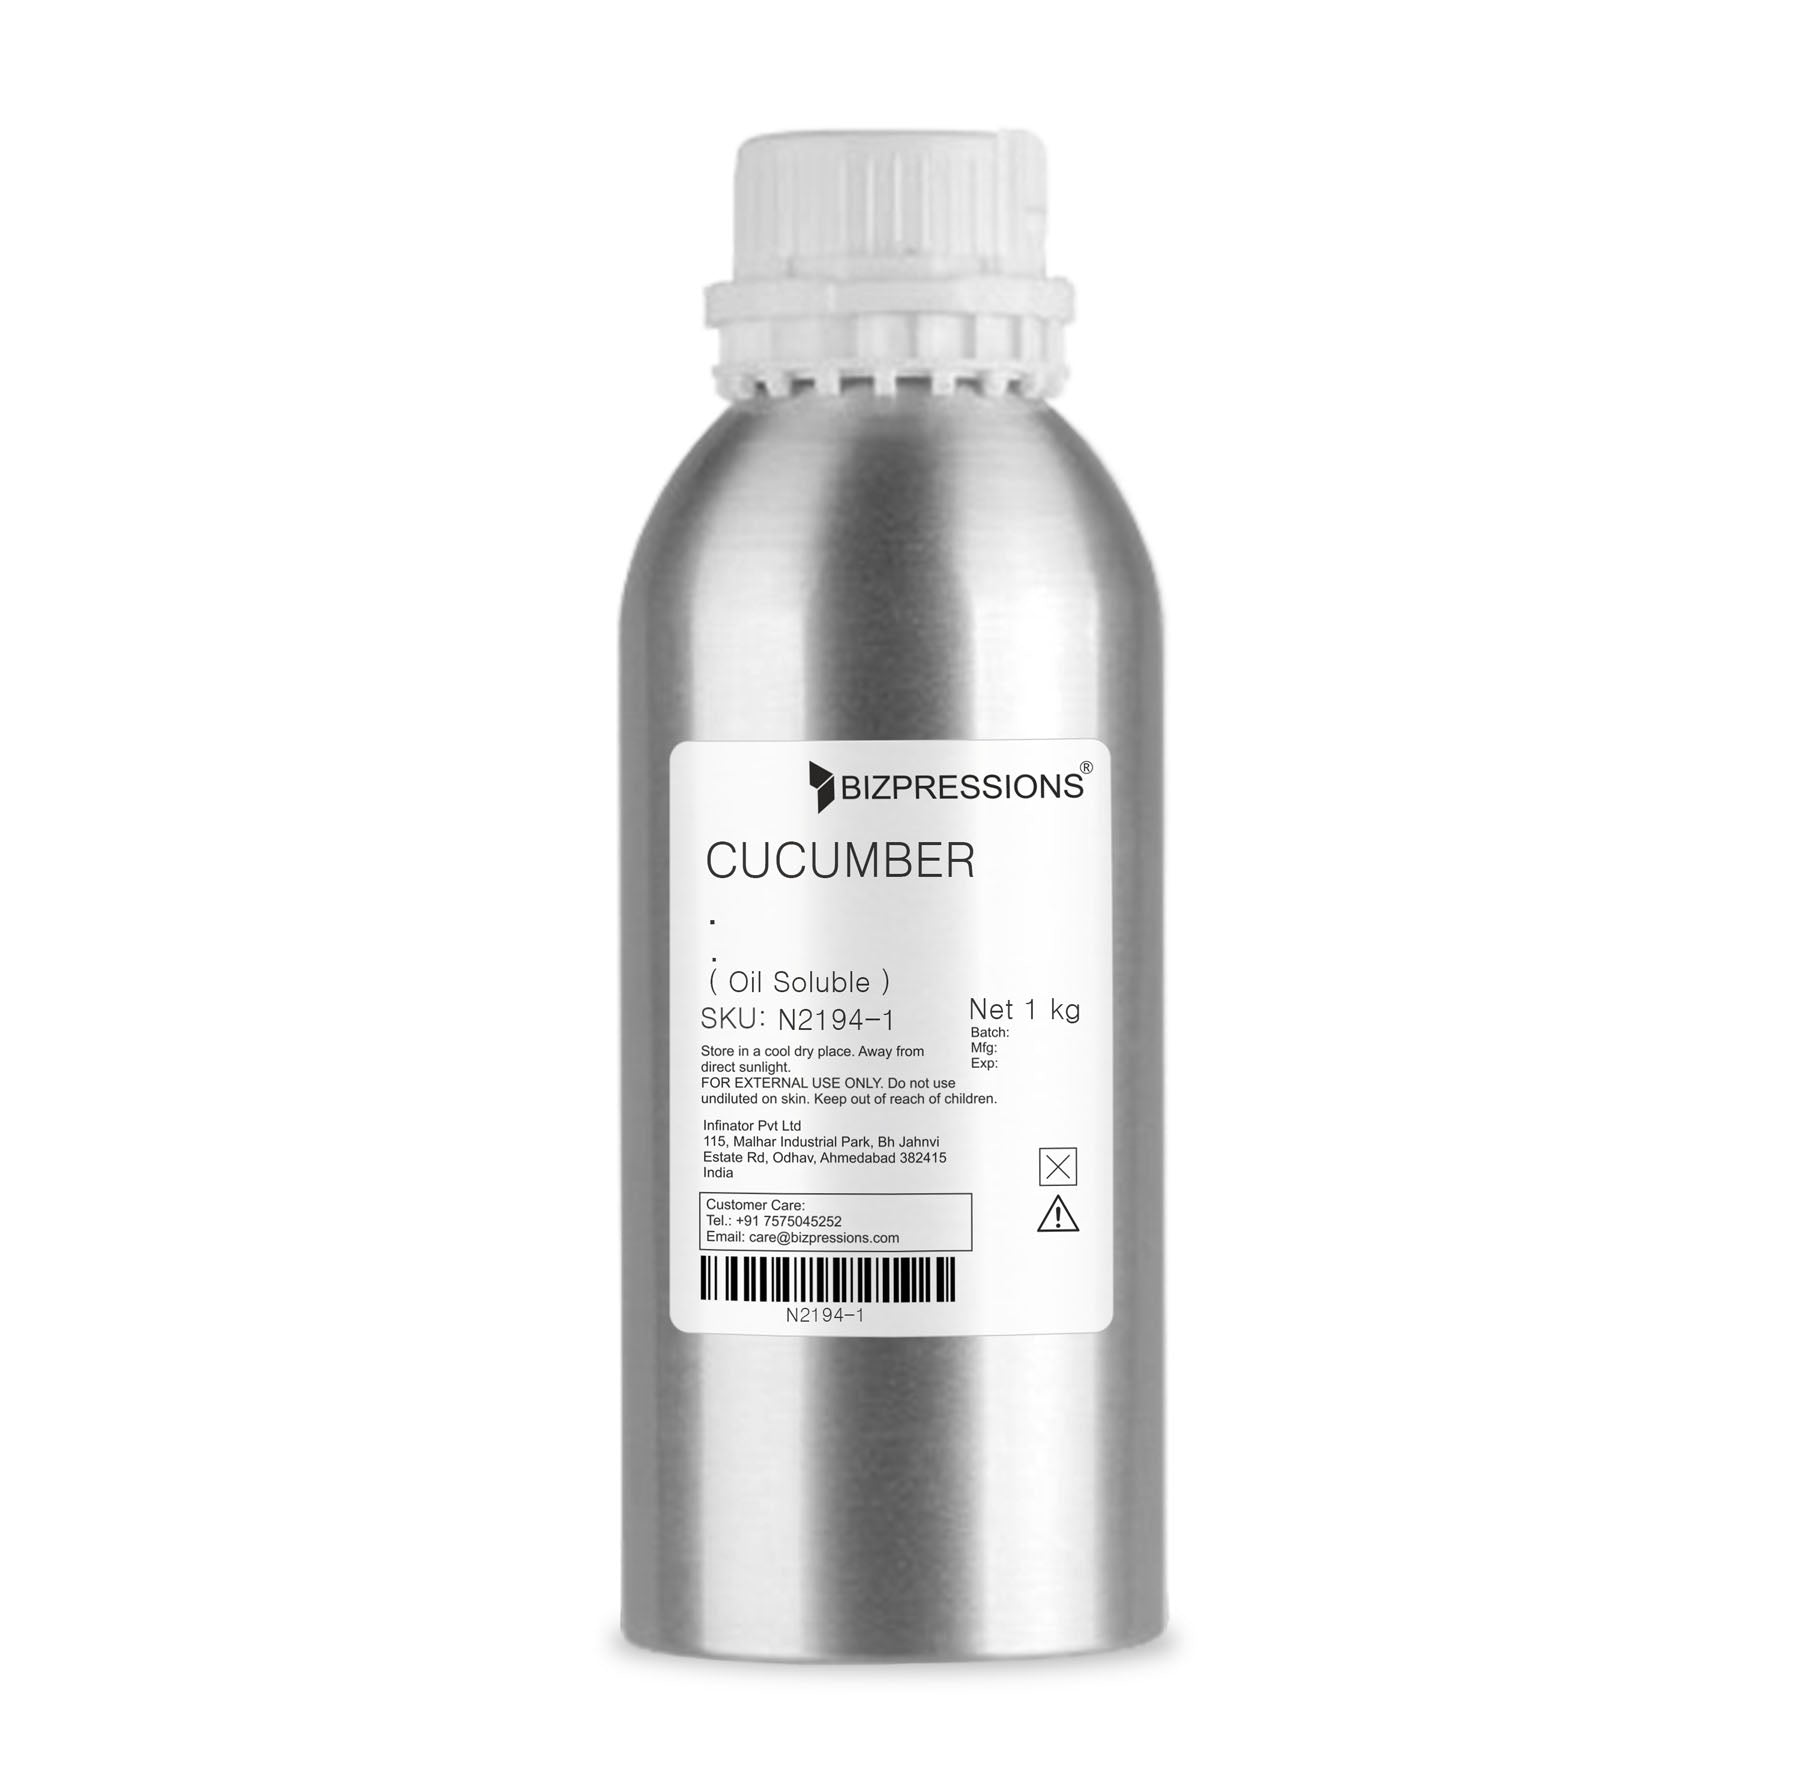 CUCUMBER - Fragrance ( Oil Soluble ) - 1 kg